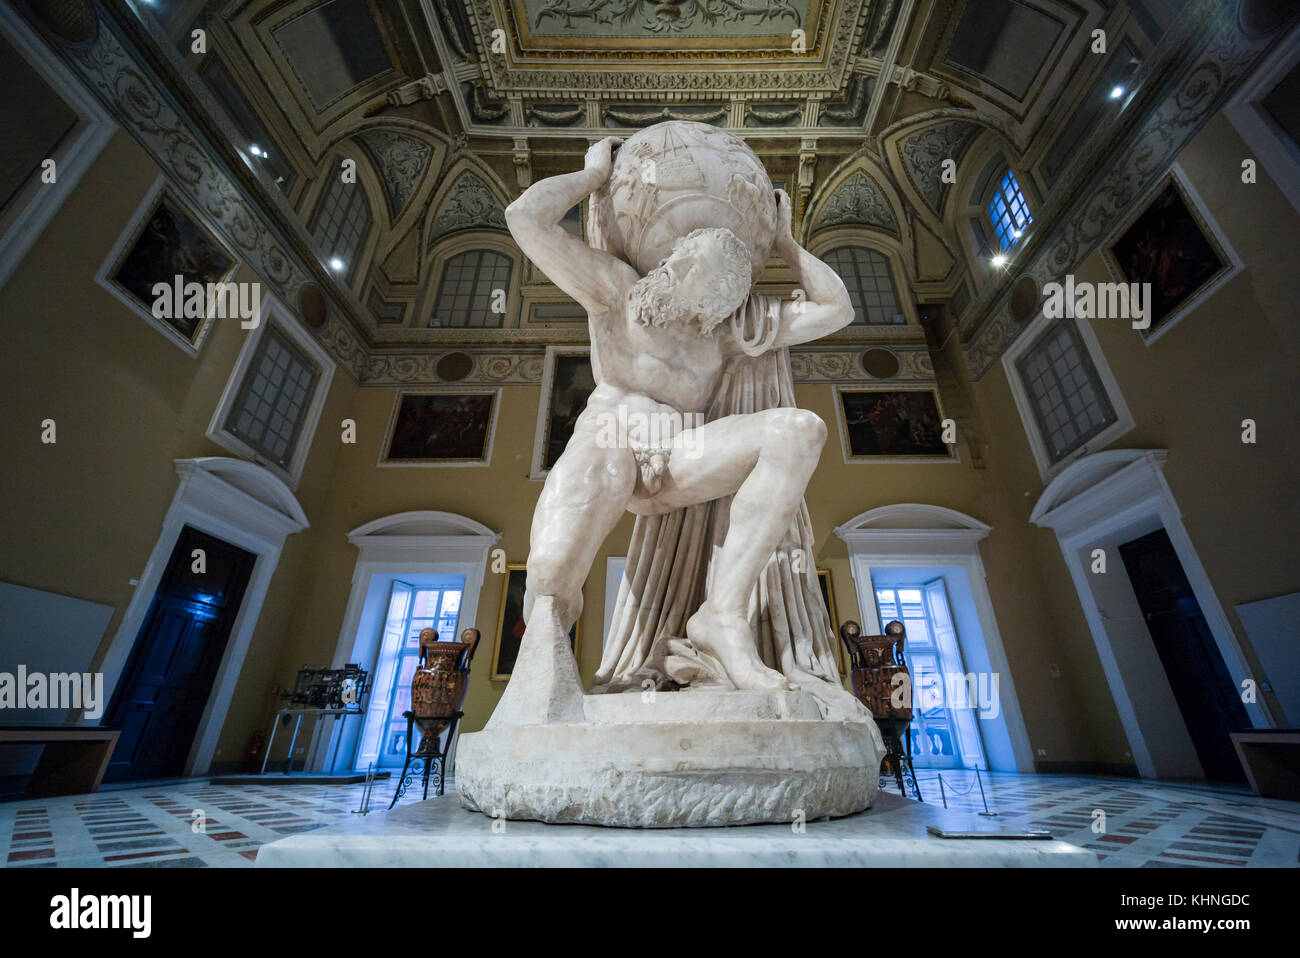 Neapel. Italien. Atlas Farnese Skulptur, 2. Jahrhundert n. Chr. Museo Archeologico Nazionale di Napoli. Neapel Nationalen Archäologischen Museum. Stockfoto